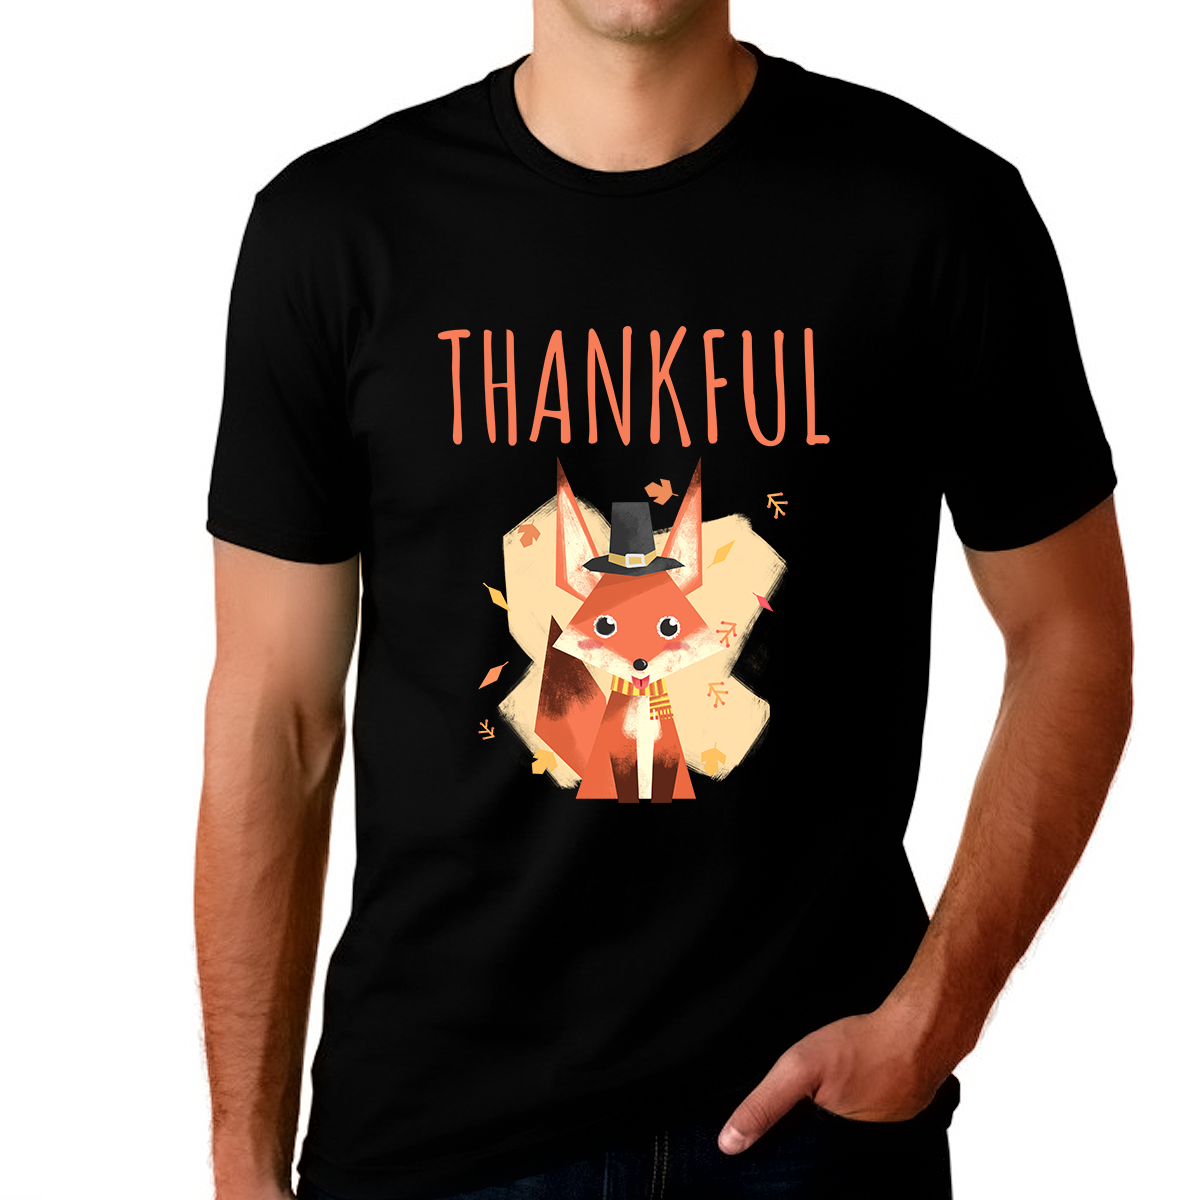 Thanksgiving Shirts for Men Cool Fox Shirt Fall Shirts Men Thanksgiving Gifts Thankful Shirts for Men